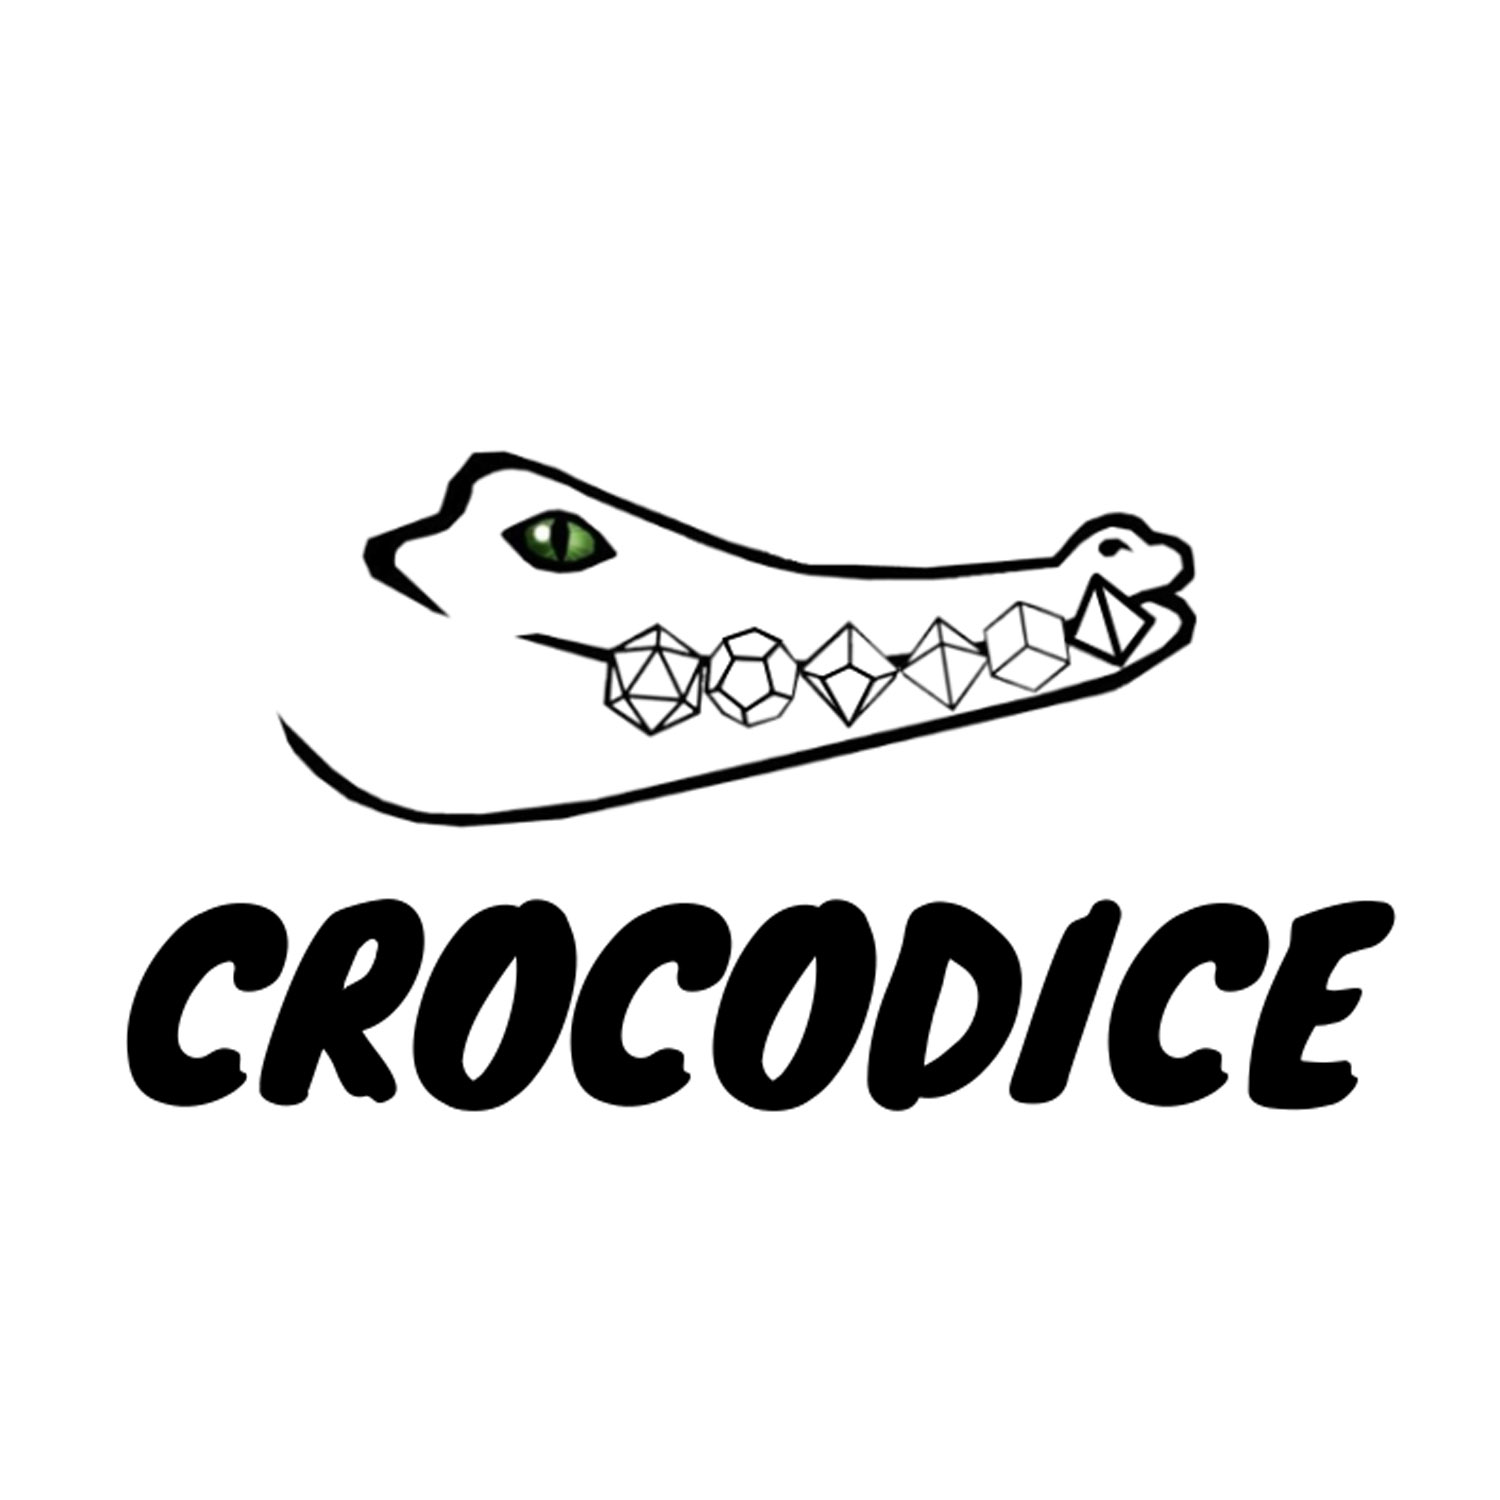 Crocodice